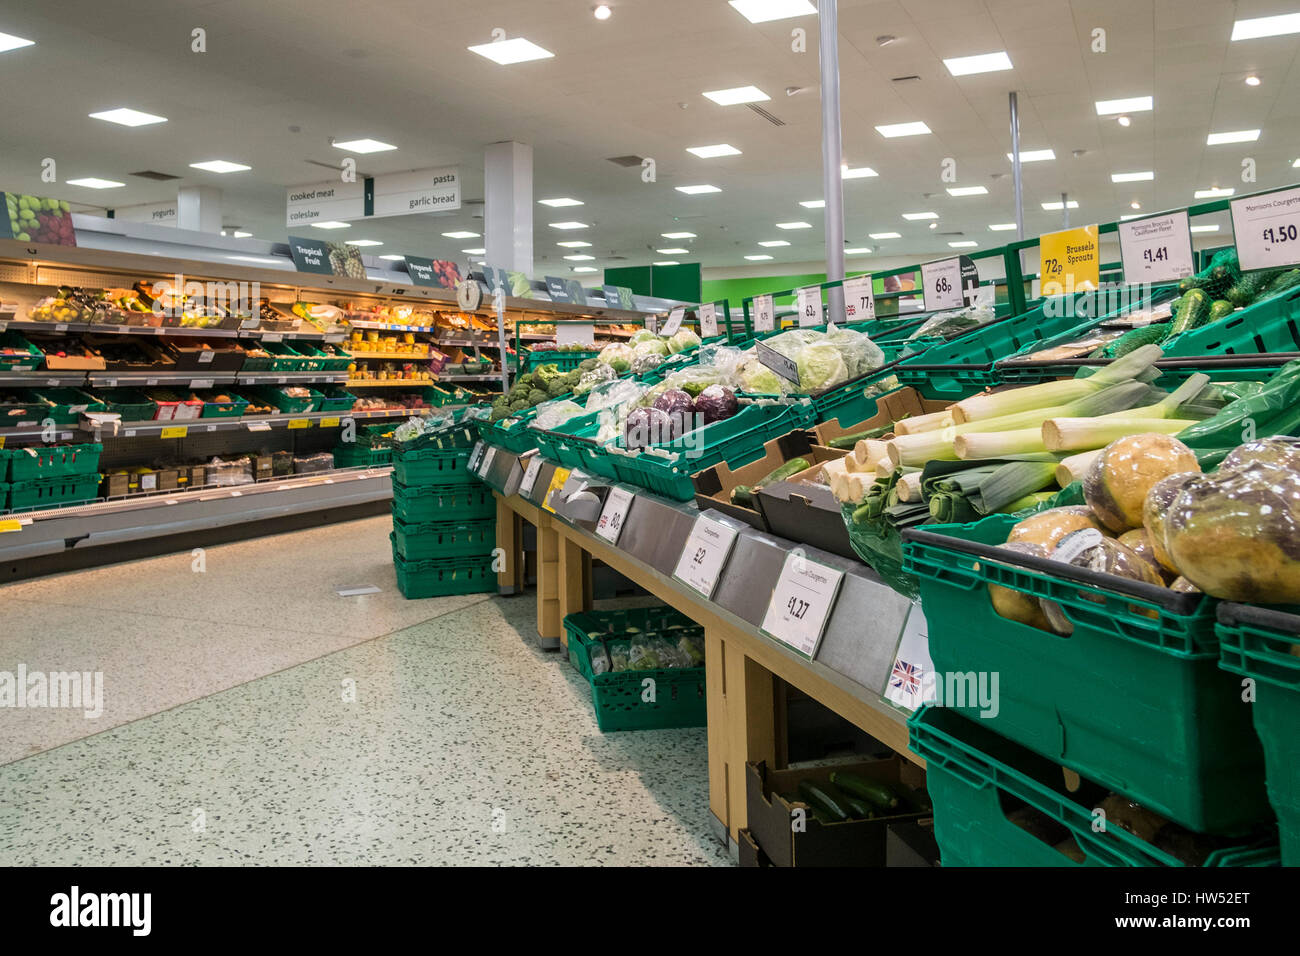 Morrisons Supermarket Interior Food Vegetables Display Retail Stock Photo